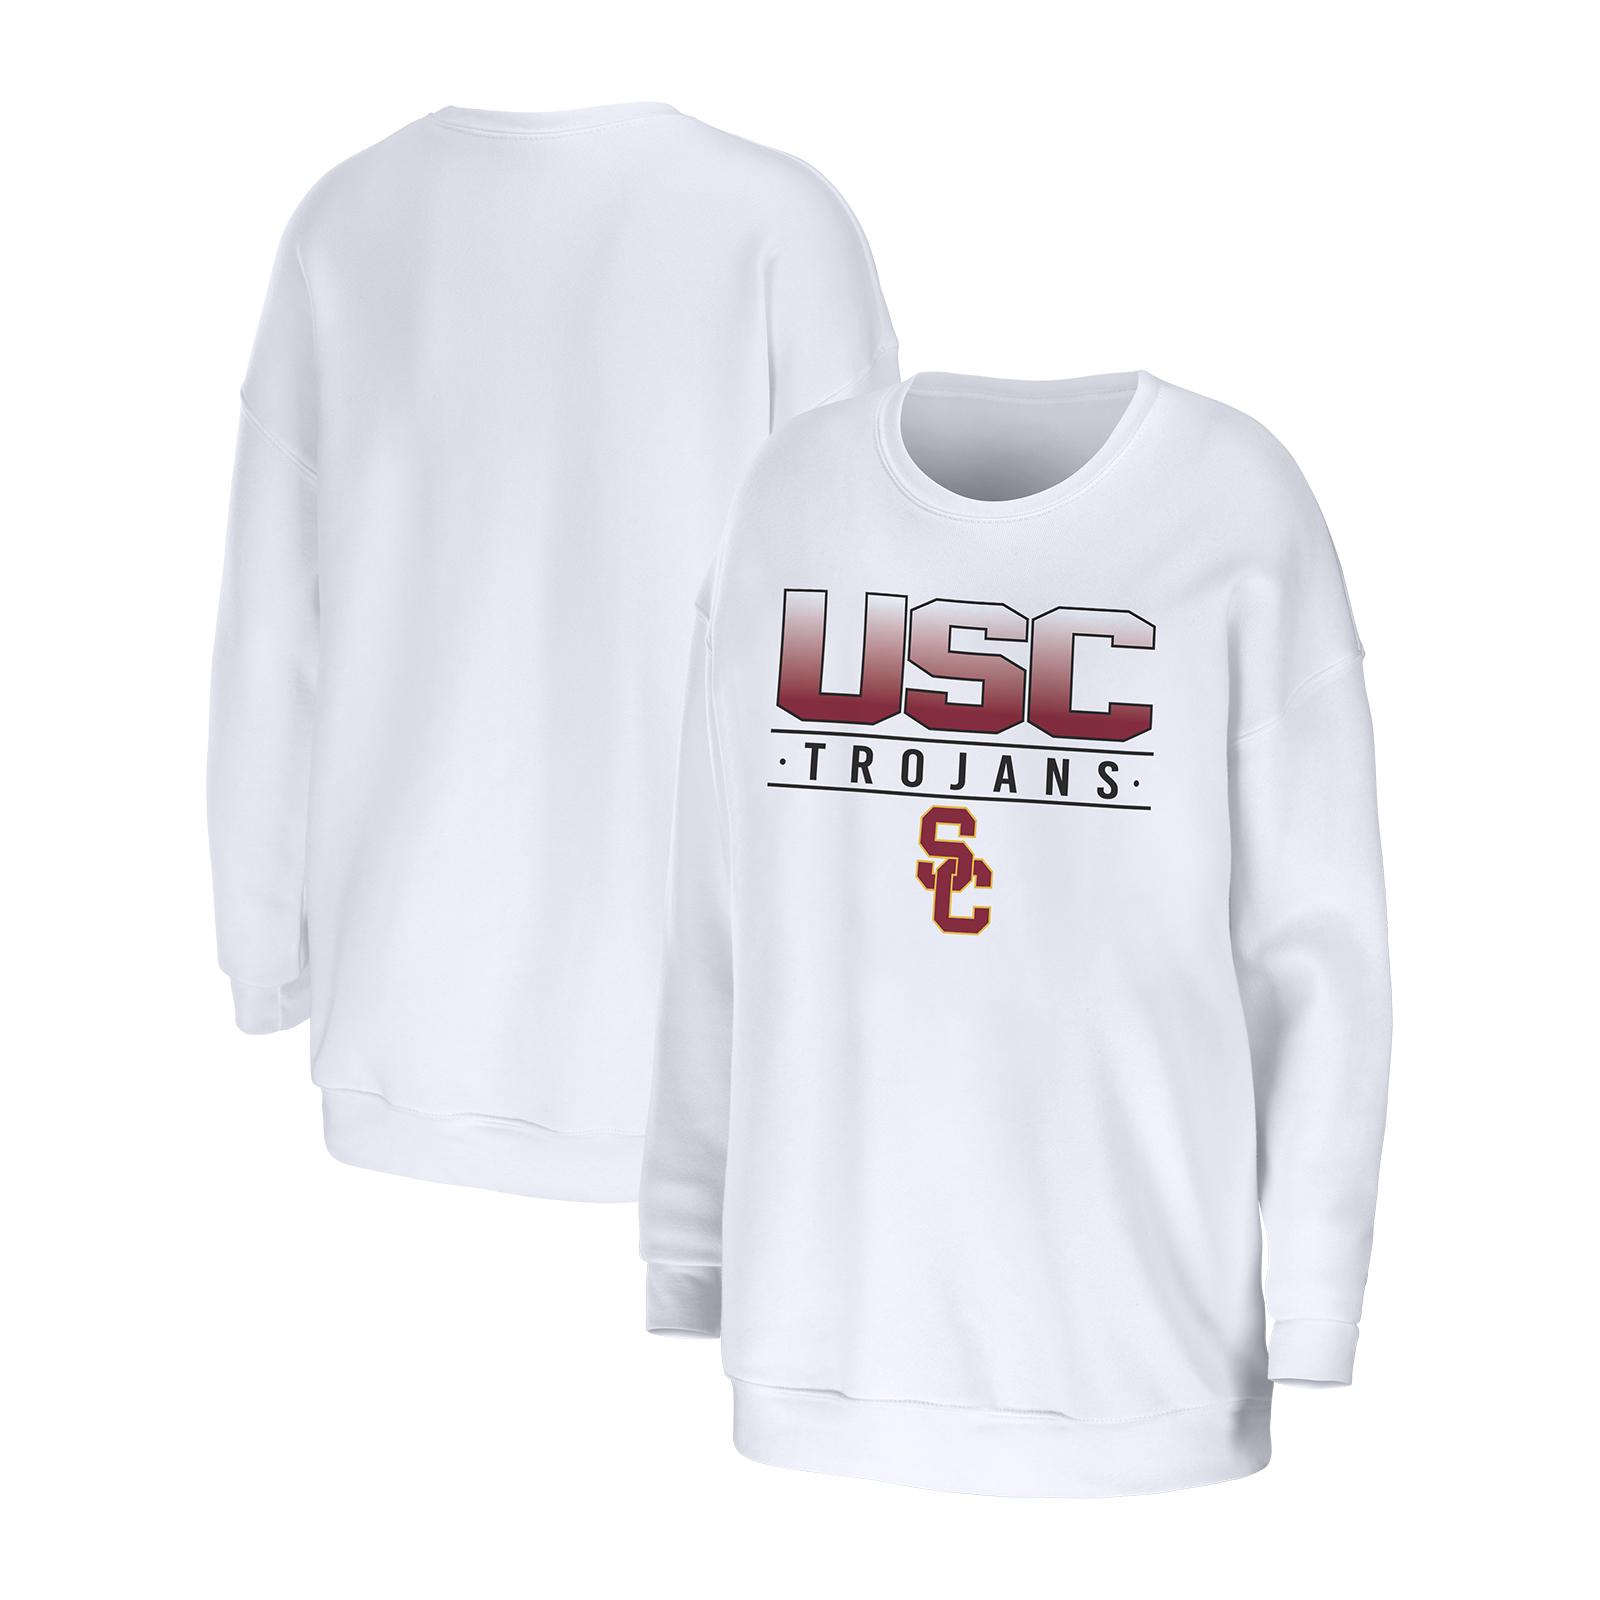 USC Trojans Womens Crew Neck Sweatshirt image01